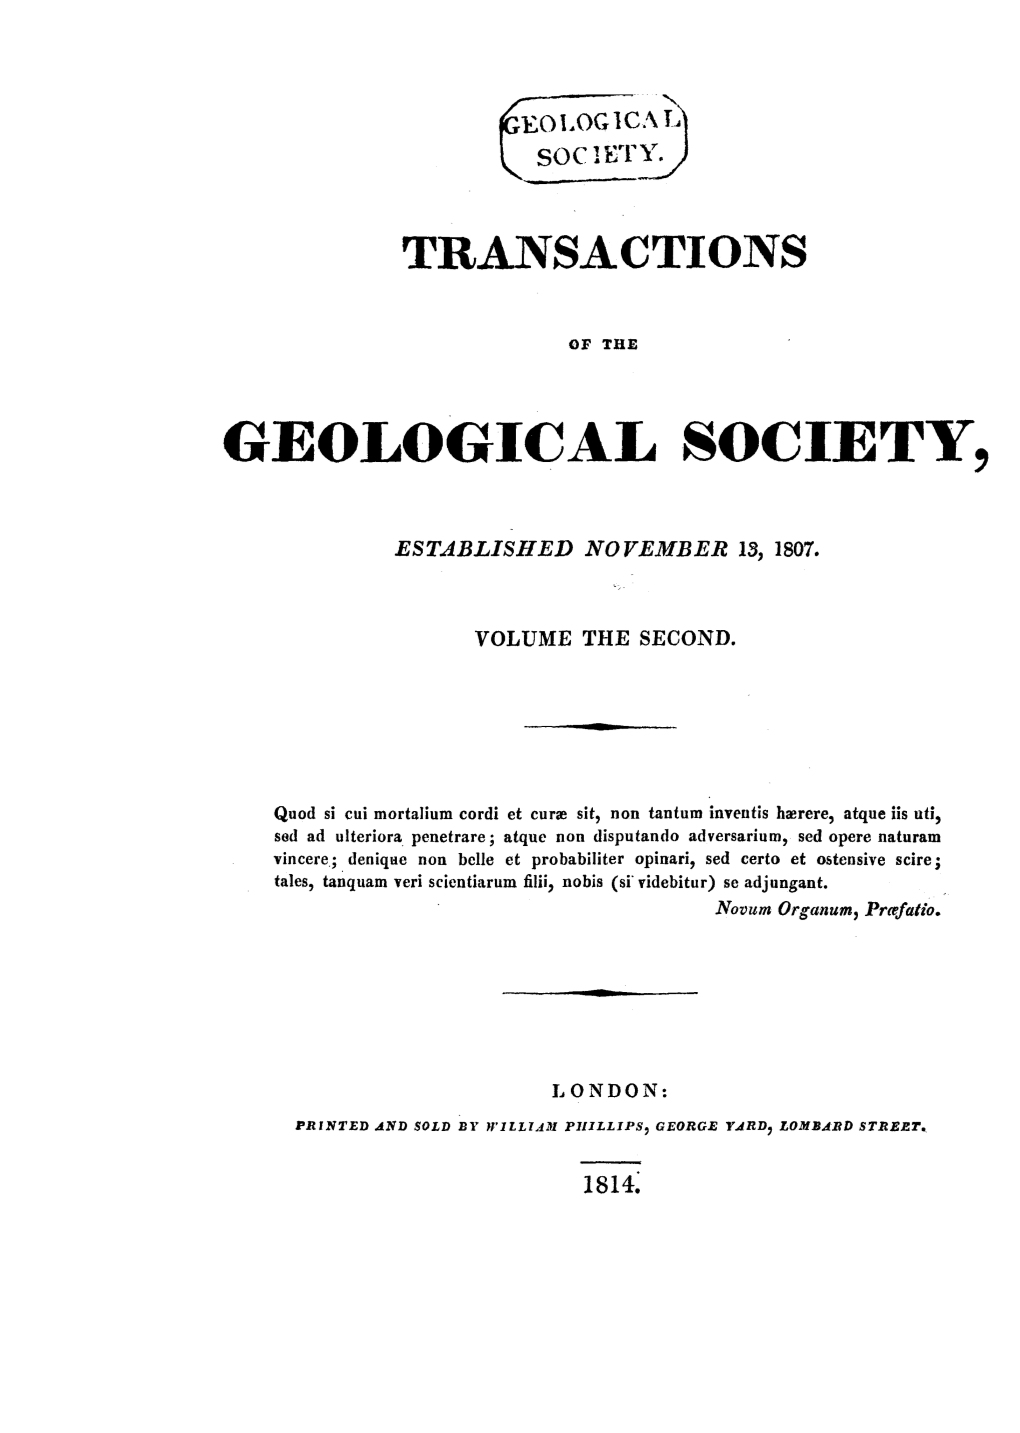 Geological, Society